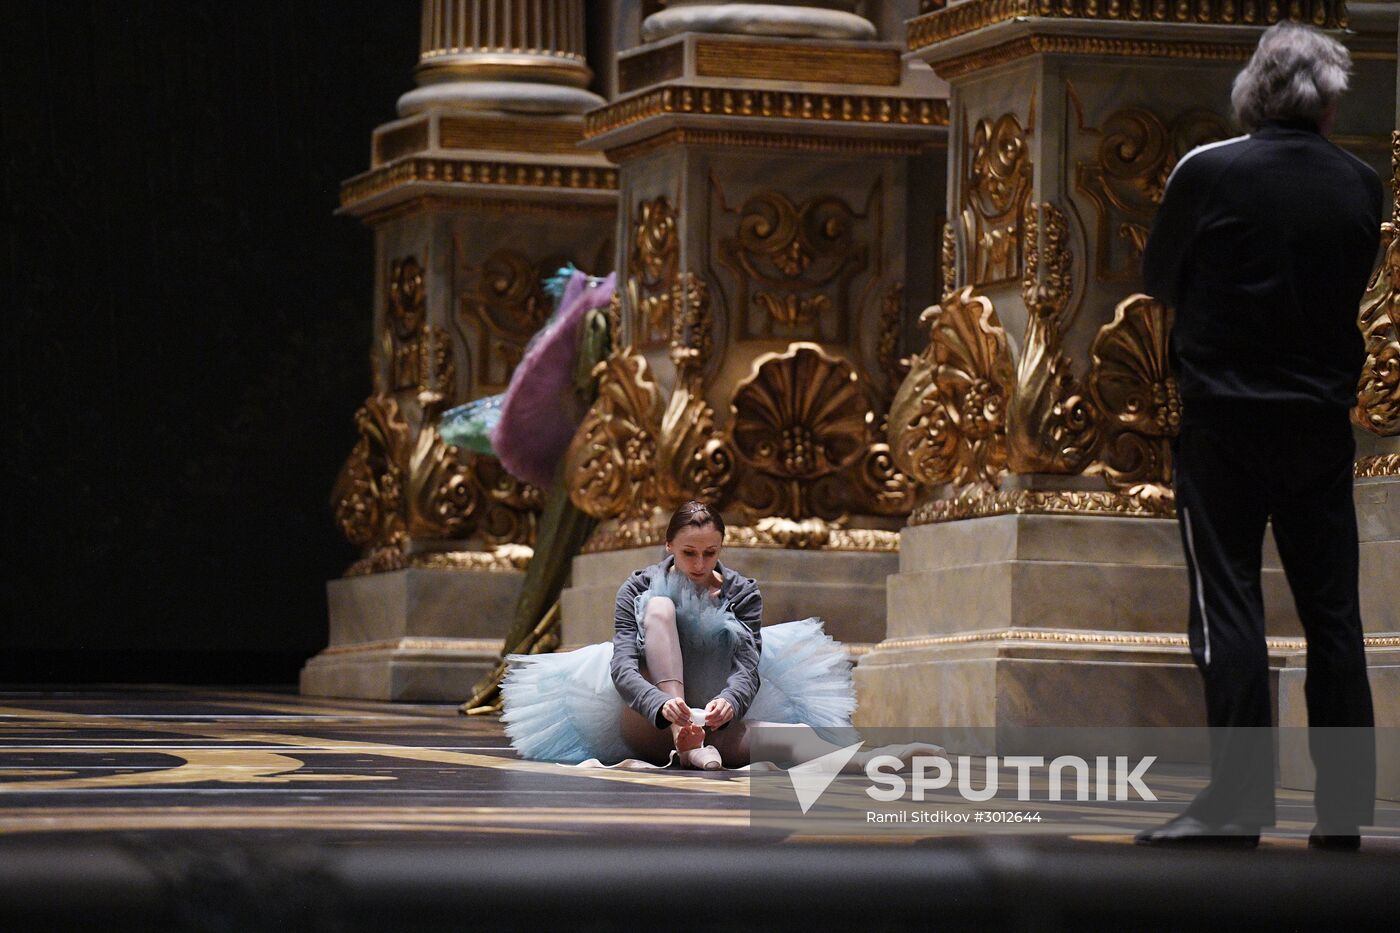 Bolshoi Theater prima ballerina Svetlana Zakharova's rehearsal